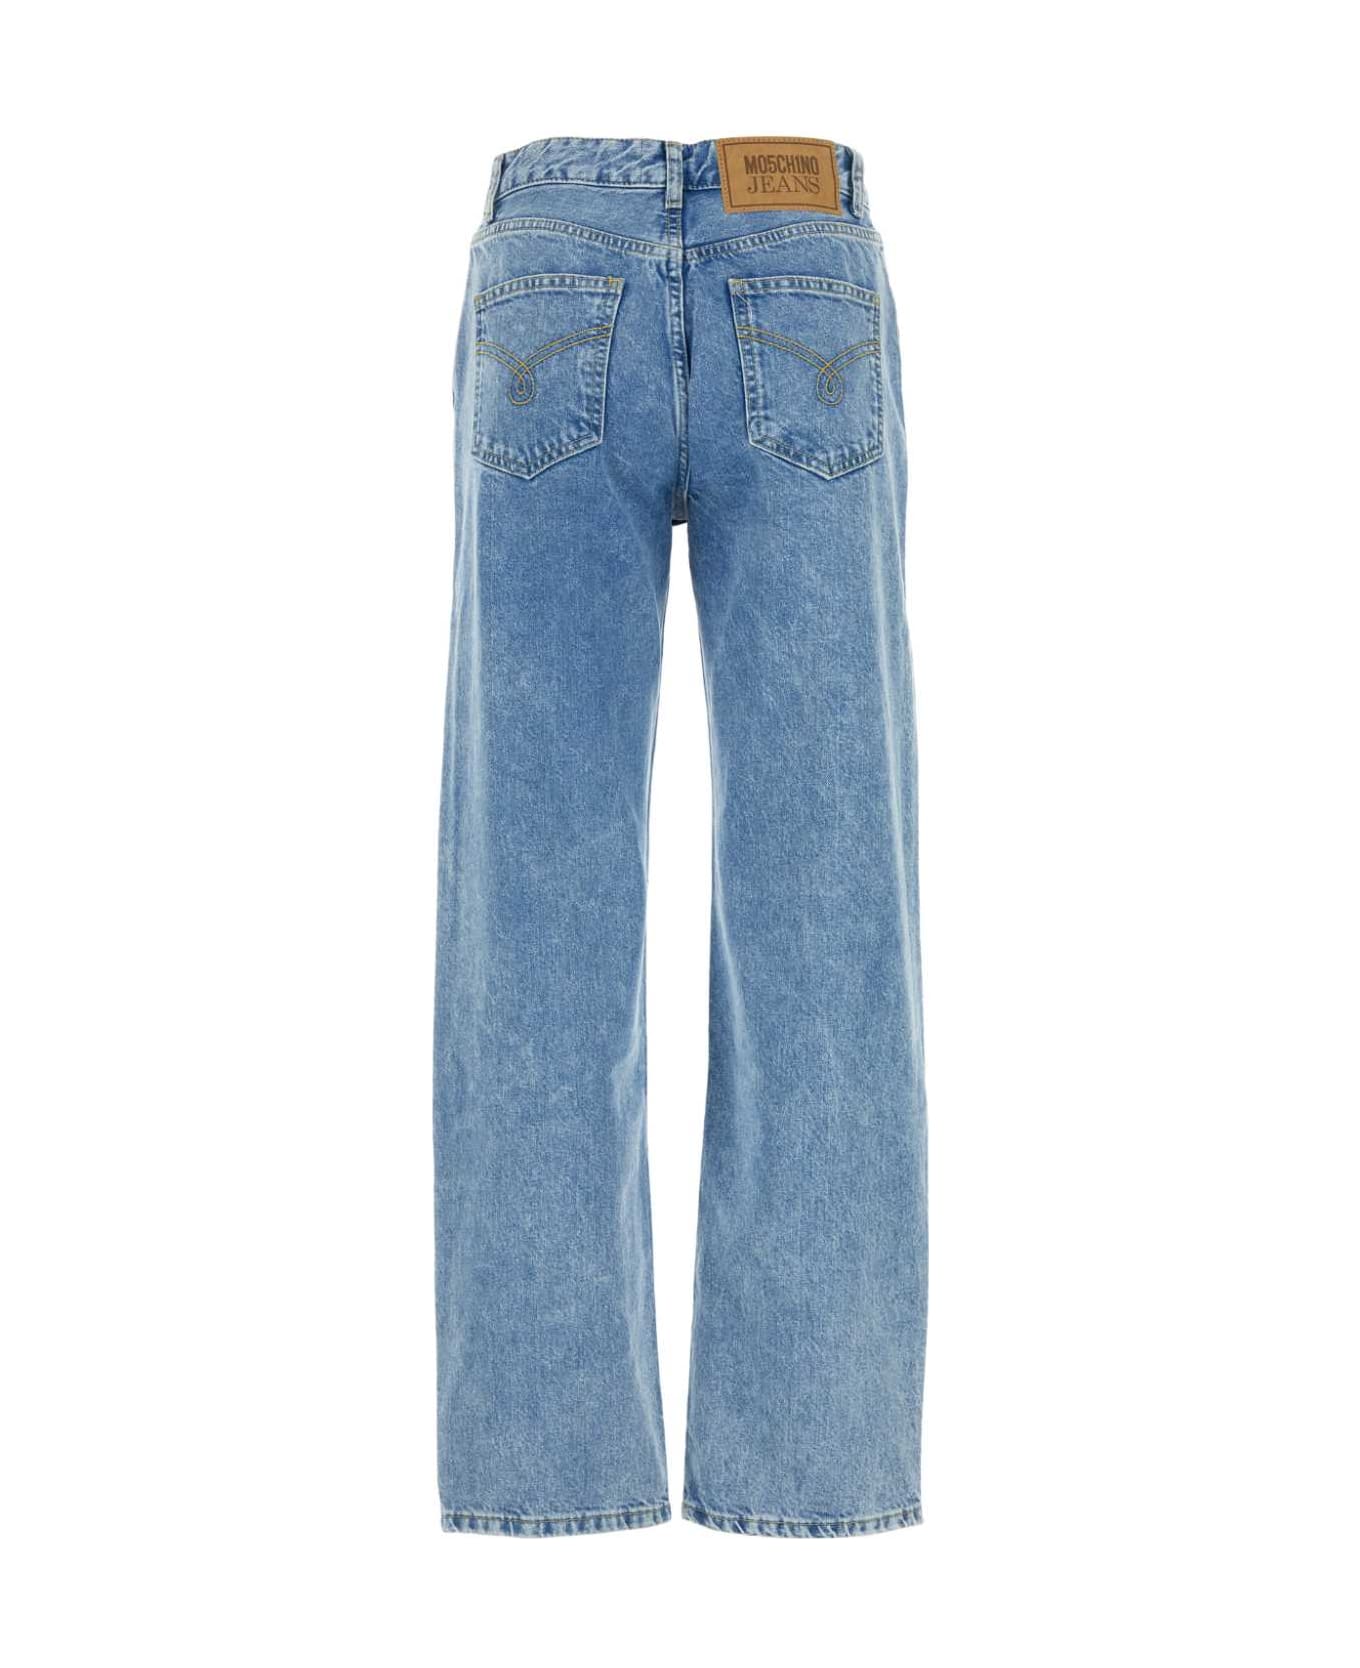 Moschino Denim Jeans - 1295 デニム